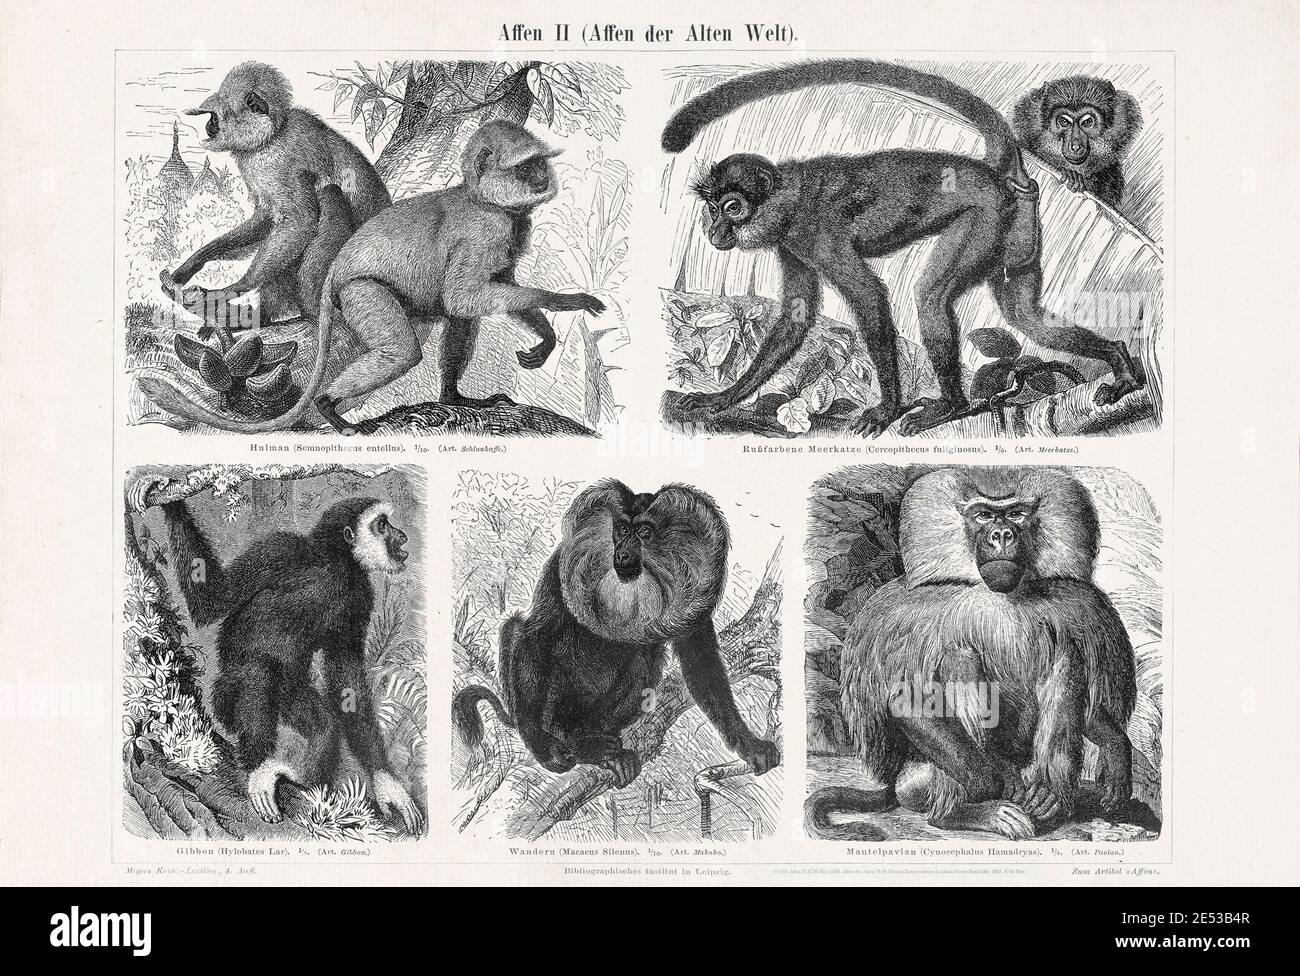 Monkeys of the Old World. Hulman (Semnopithecus entellus). Russfarbene Meerkatze (Cercopithecus fuliginosus). Gibbon (Hylobates Lar). Wanderu (Macacus Stock Photo